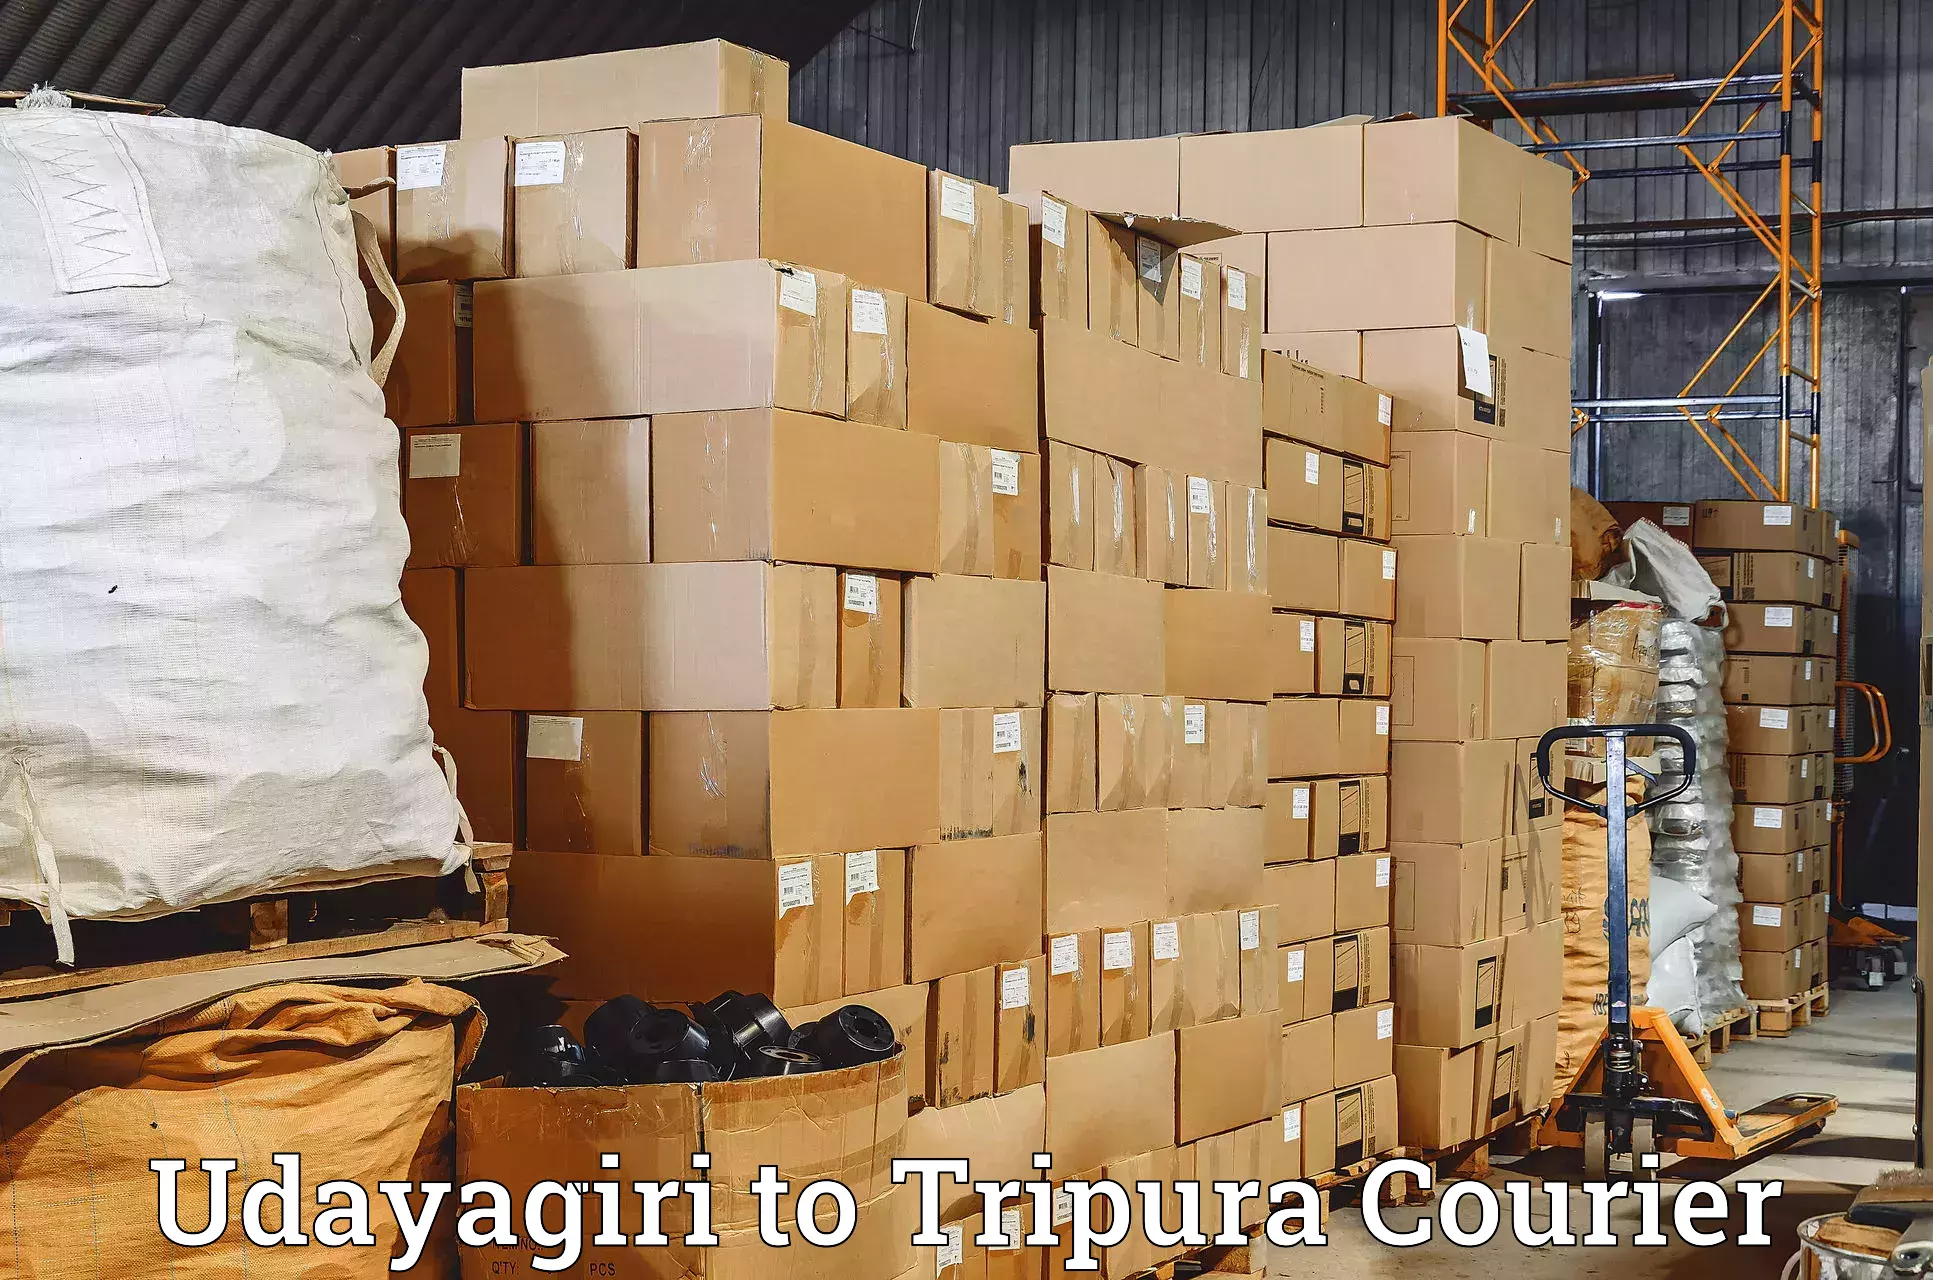 Courier service comparison Udayagiri to Aambasa